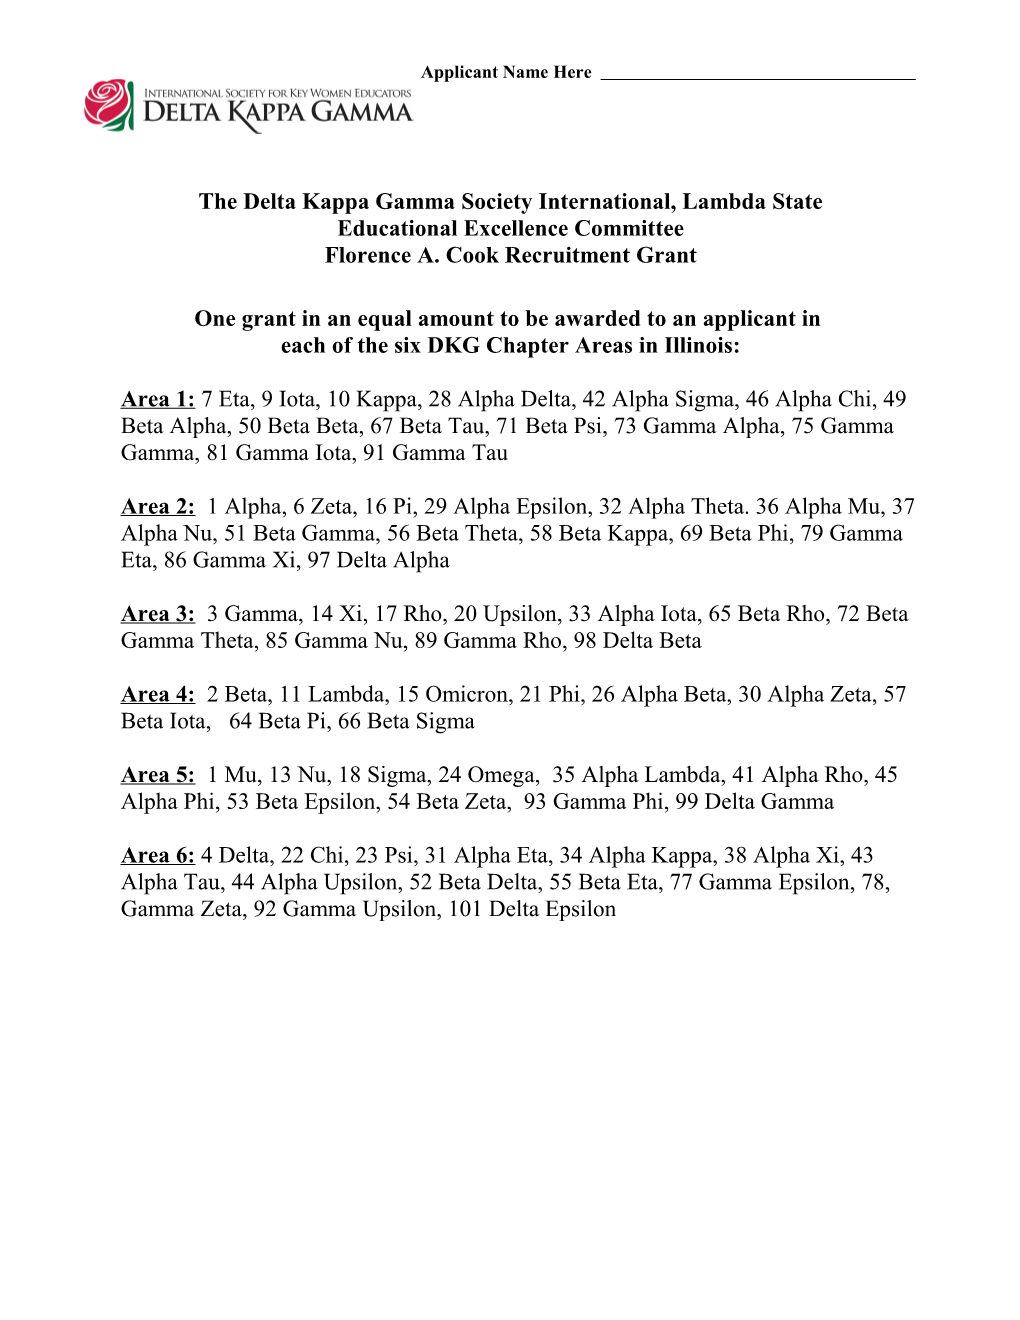 The Delta Kappa Gamma Society International, Lambda State